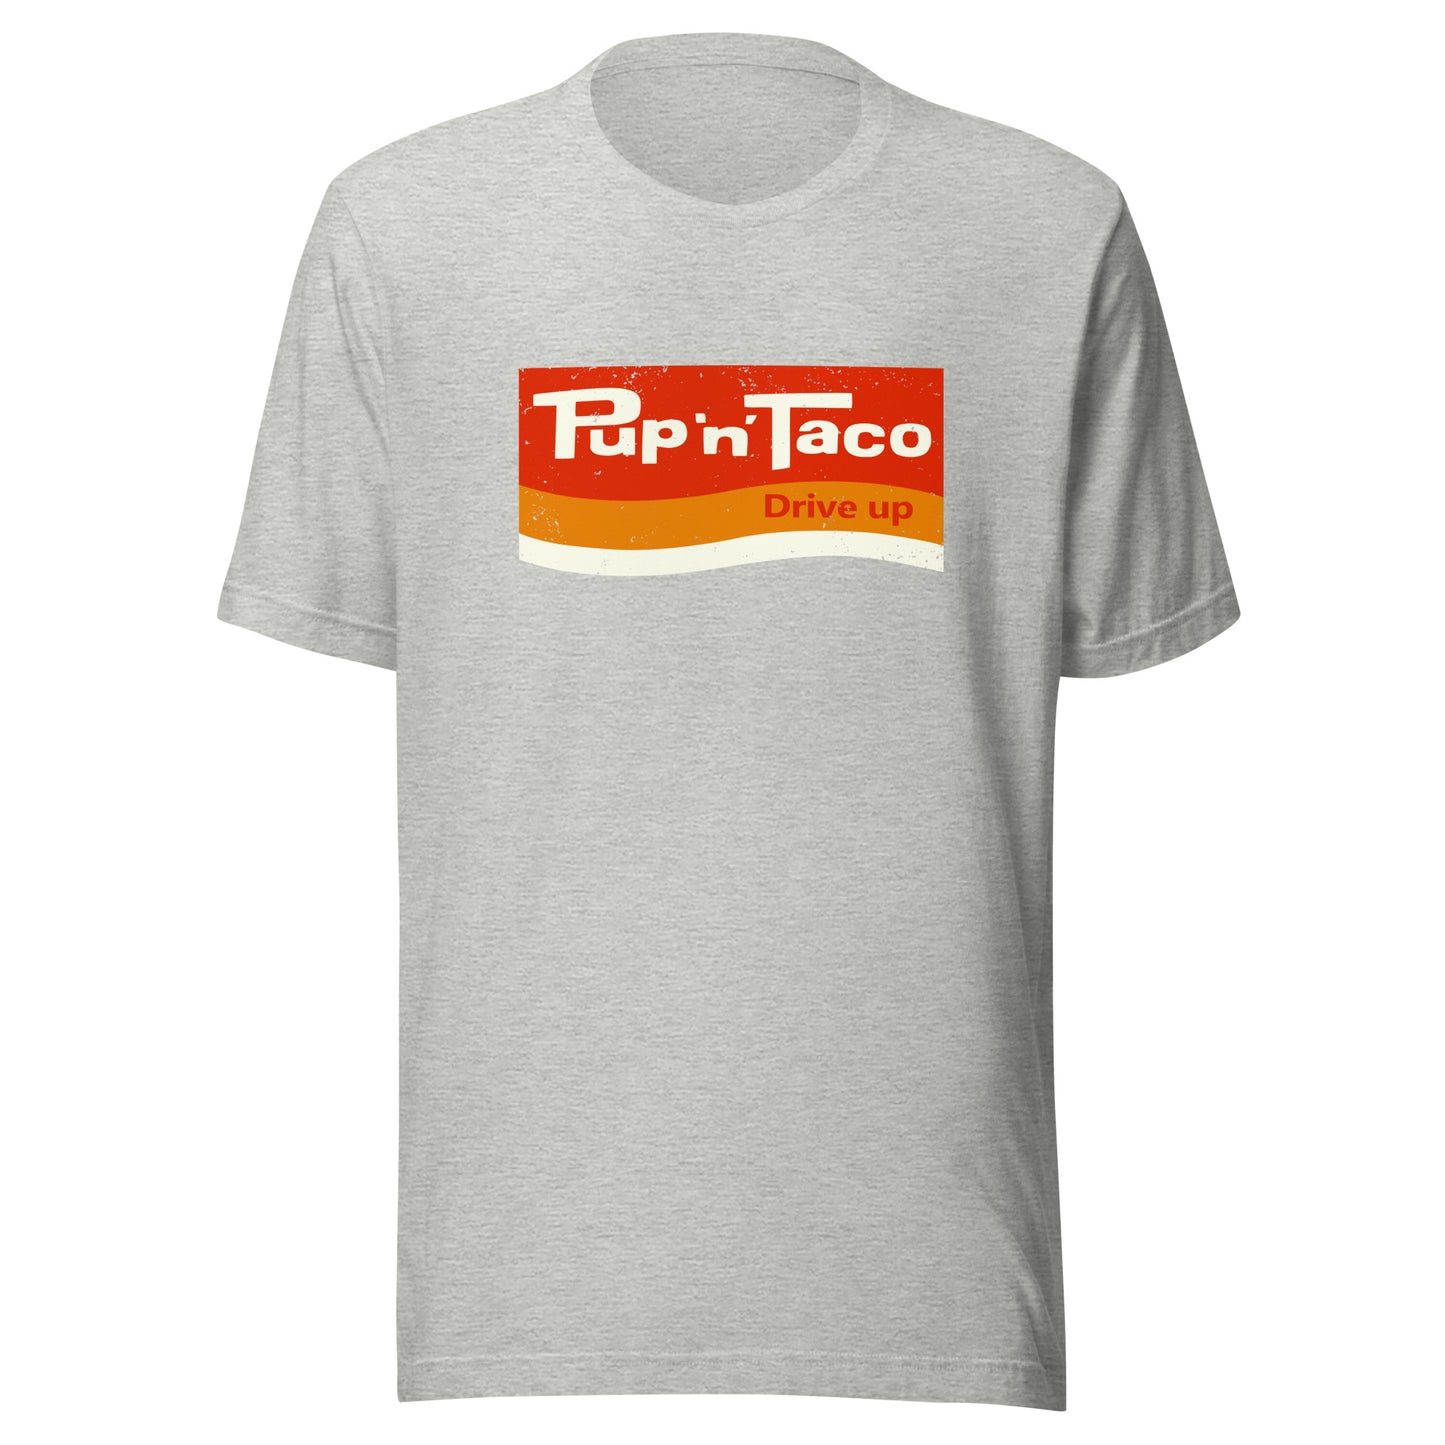 Pup 'n' Taco T-Shirt - Retro 70s Vintage Fast Food Chain Tee